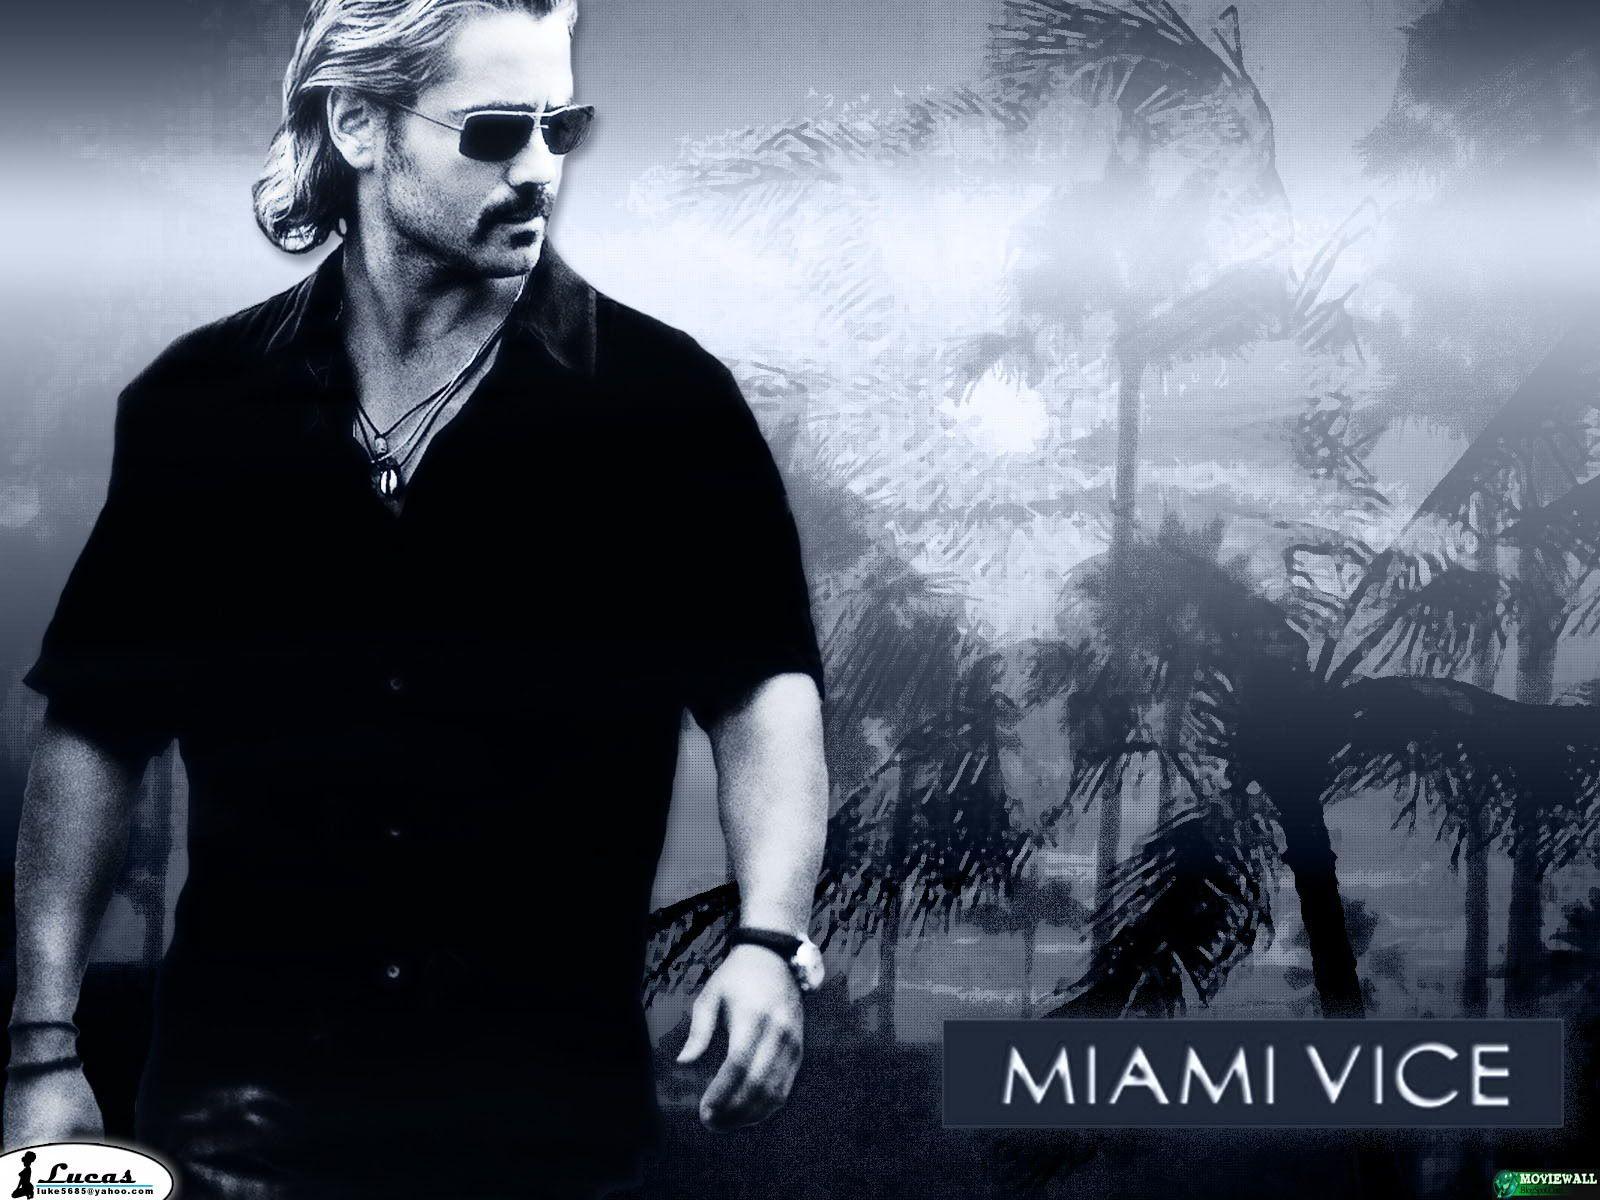 Bildergebnis für miami vice movie. Miami vice. Miami